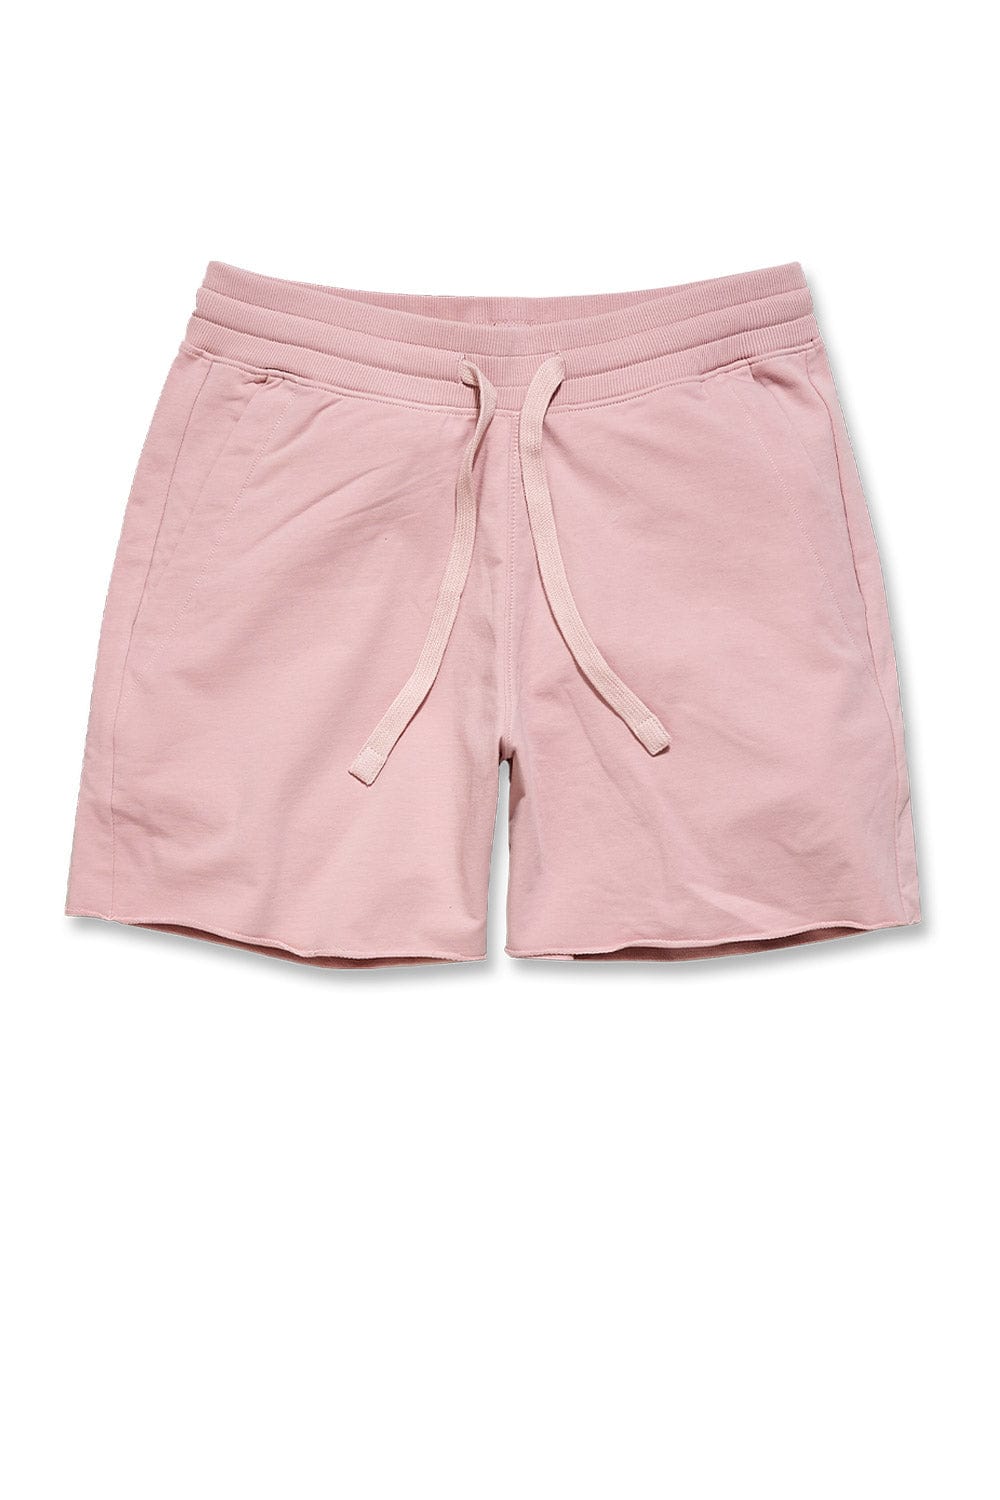 Jordan Craig Athletic - Summer Breeze Knit Shorts Pink Rust / S